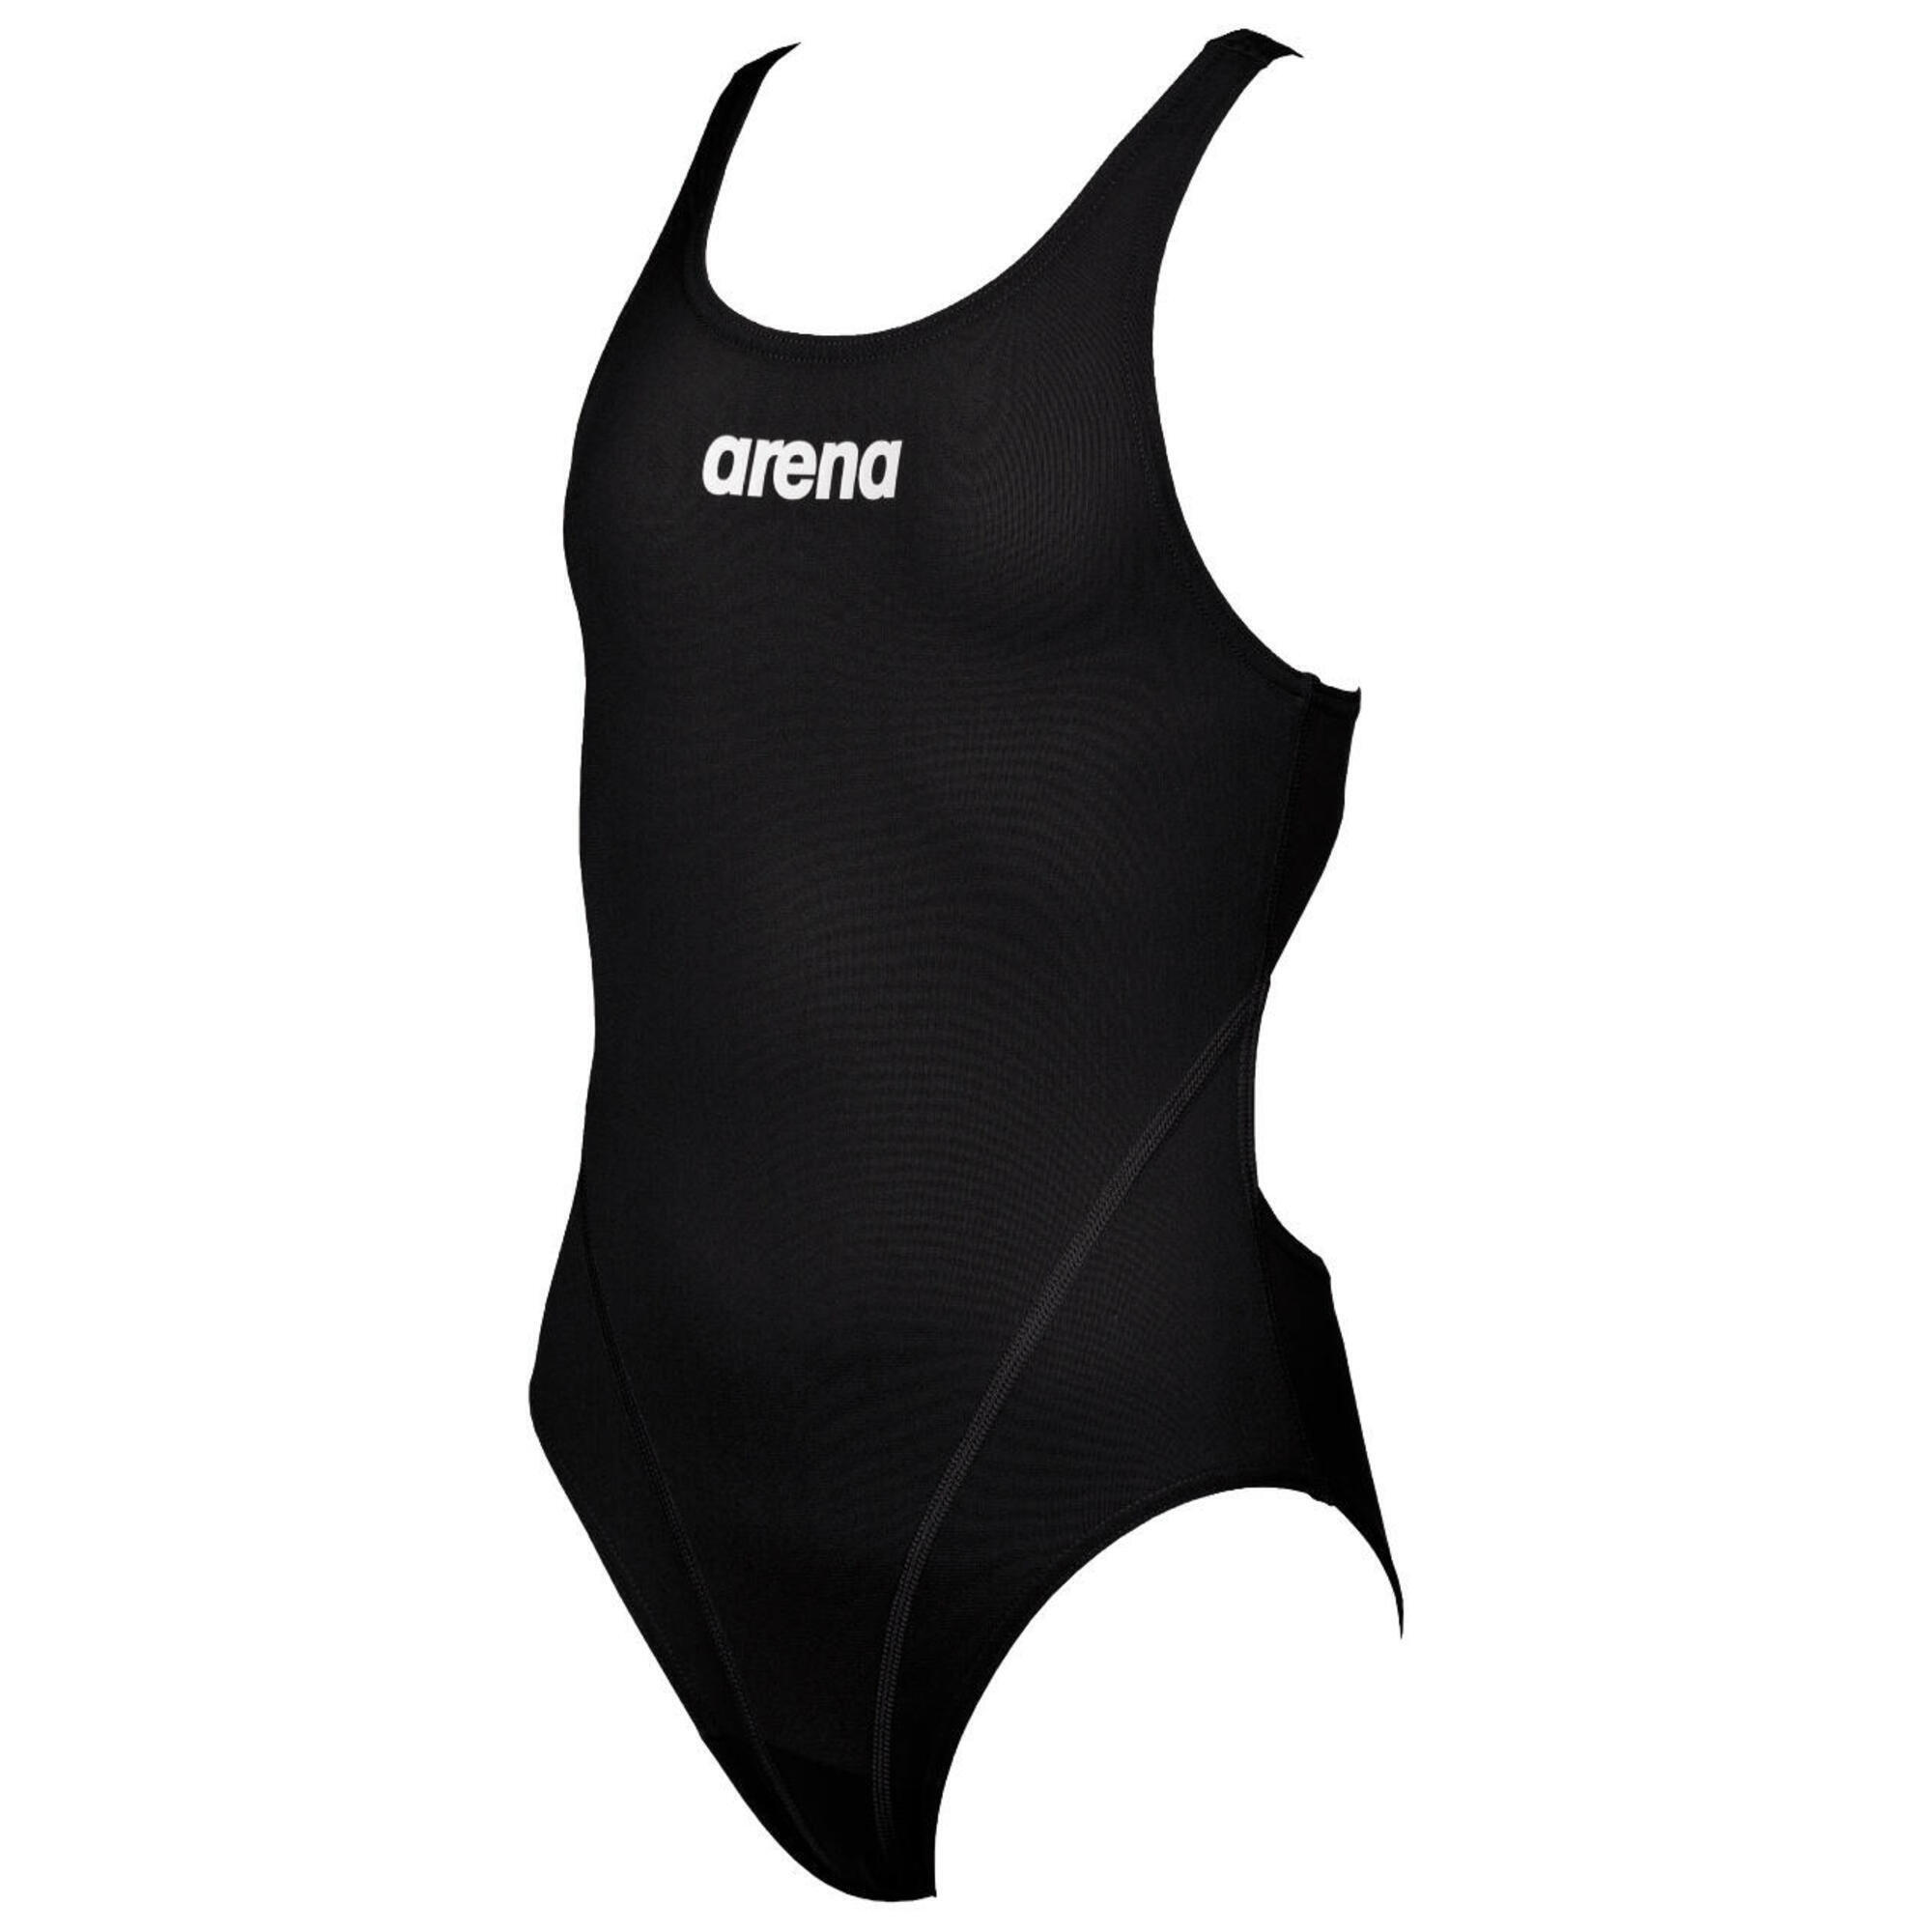 ARENA arena Girls Sports Swimsuit Solid Swim Tech, Black-White